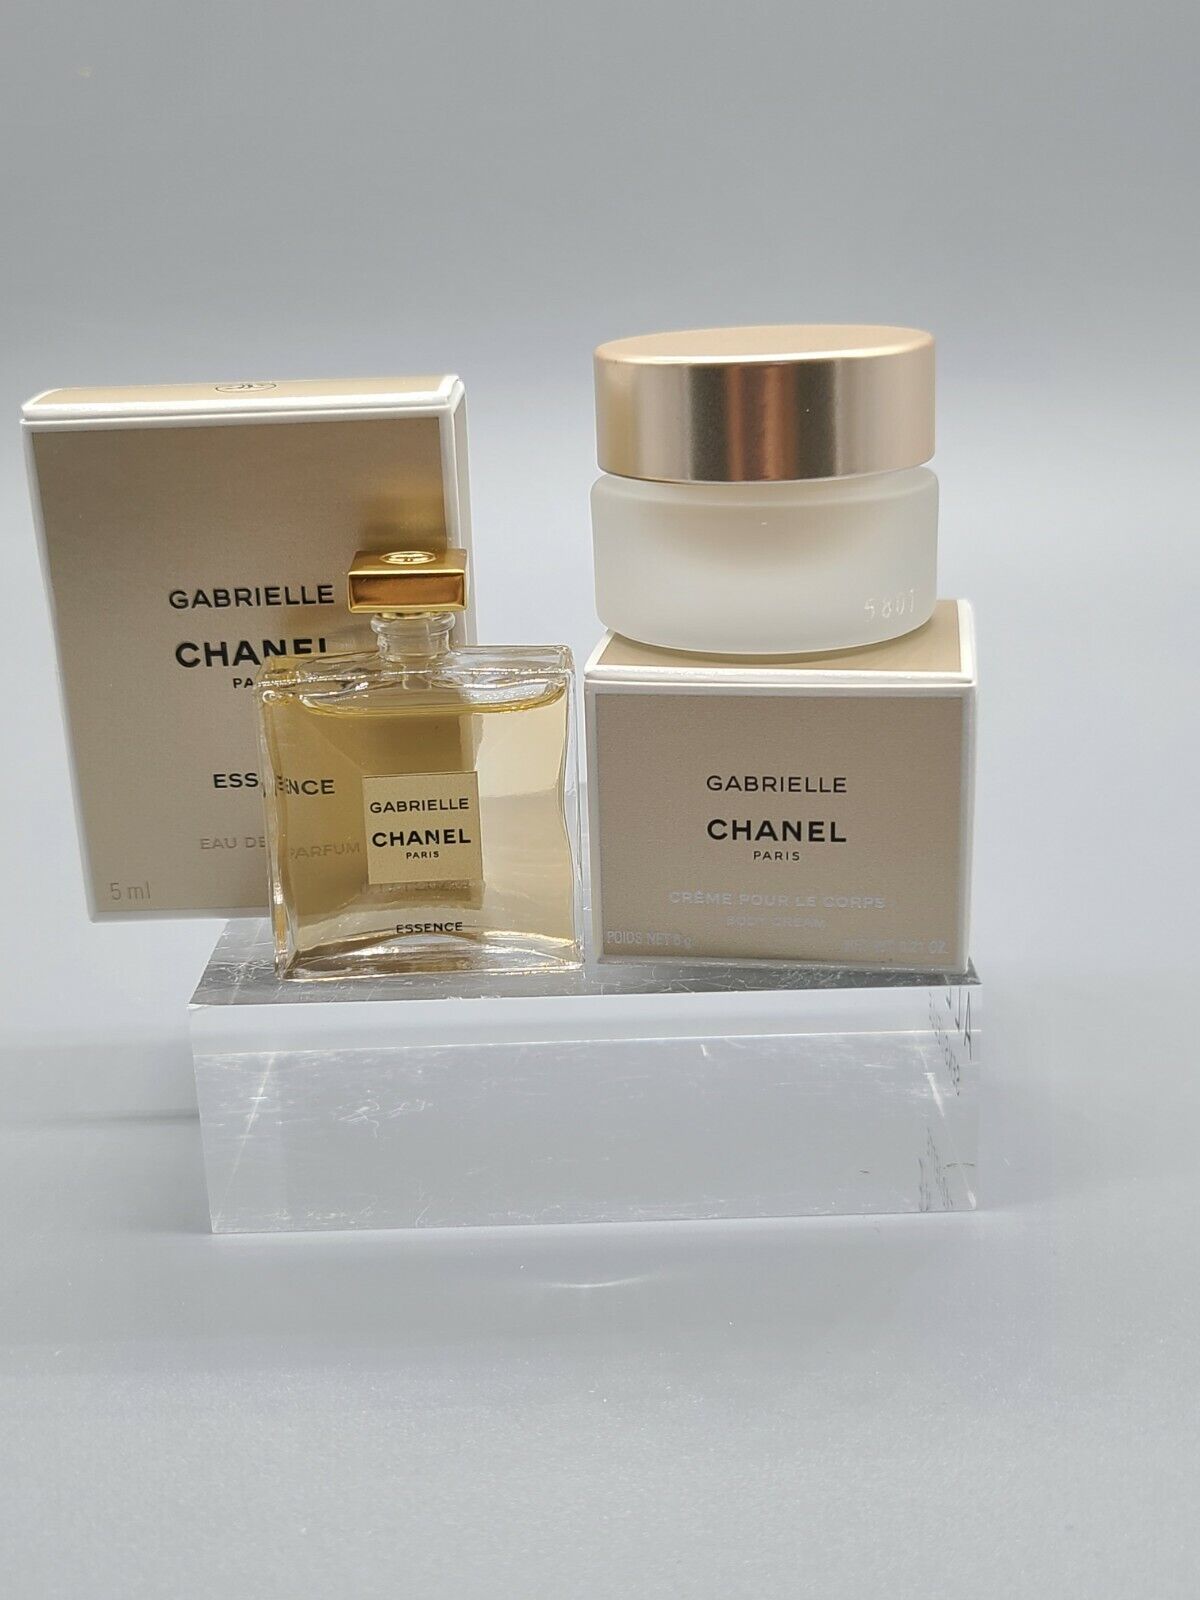 Chanel Omaha Mall Gabrielle Essence Mini 5 ml Body + Cream oz Parfum .21 Oklahoma City Mall